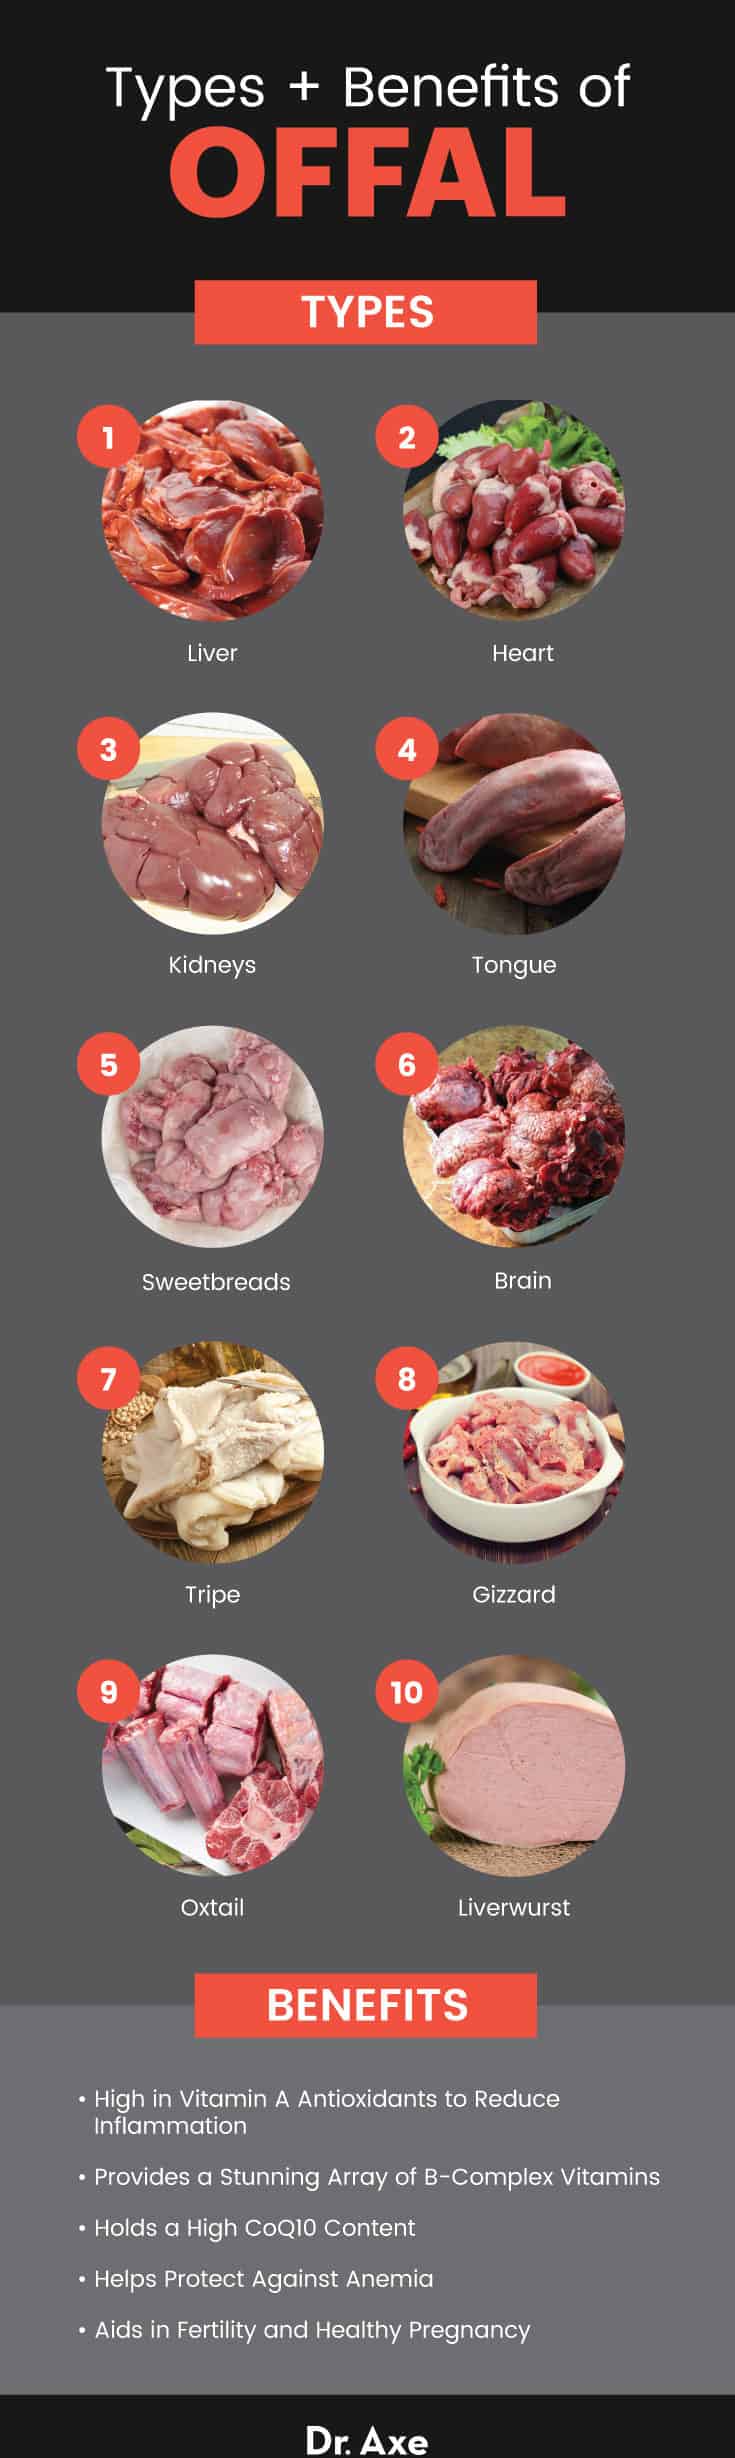 Benefits of organ meats